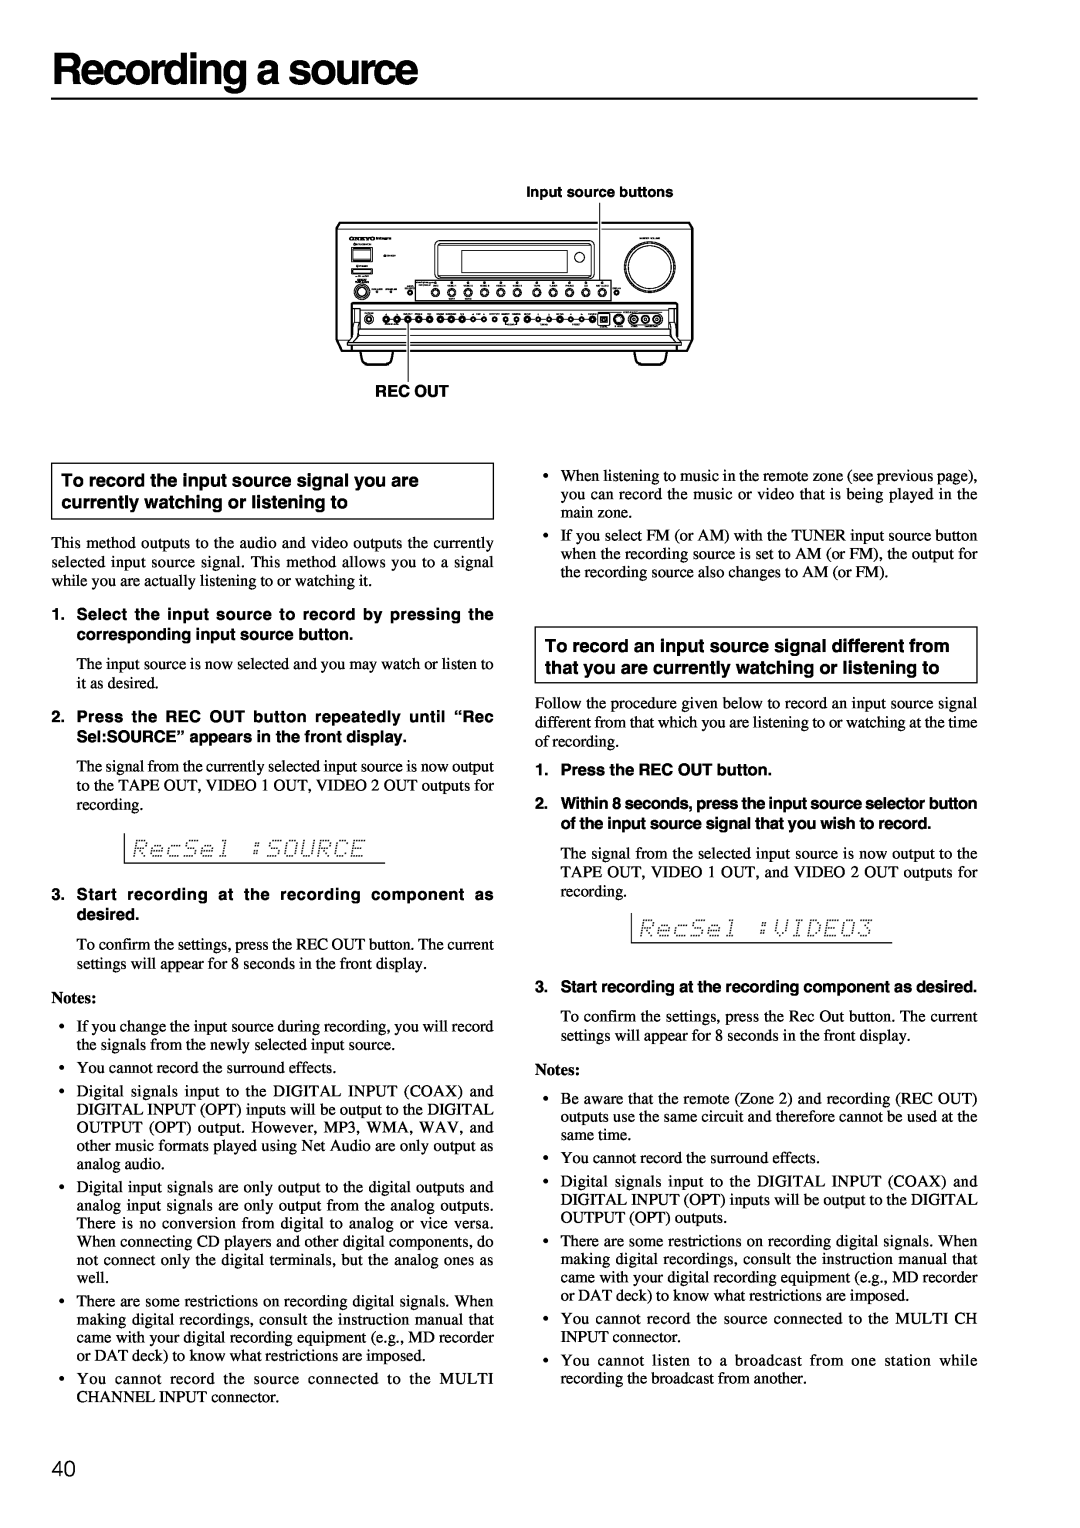 Onkyo TX-NR900E instruction manual Recording a source 